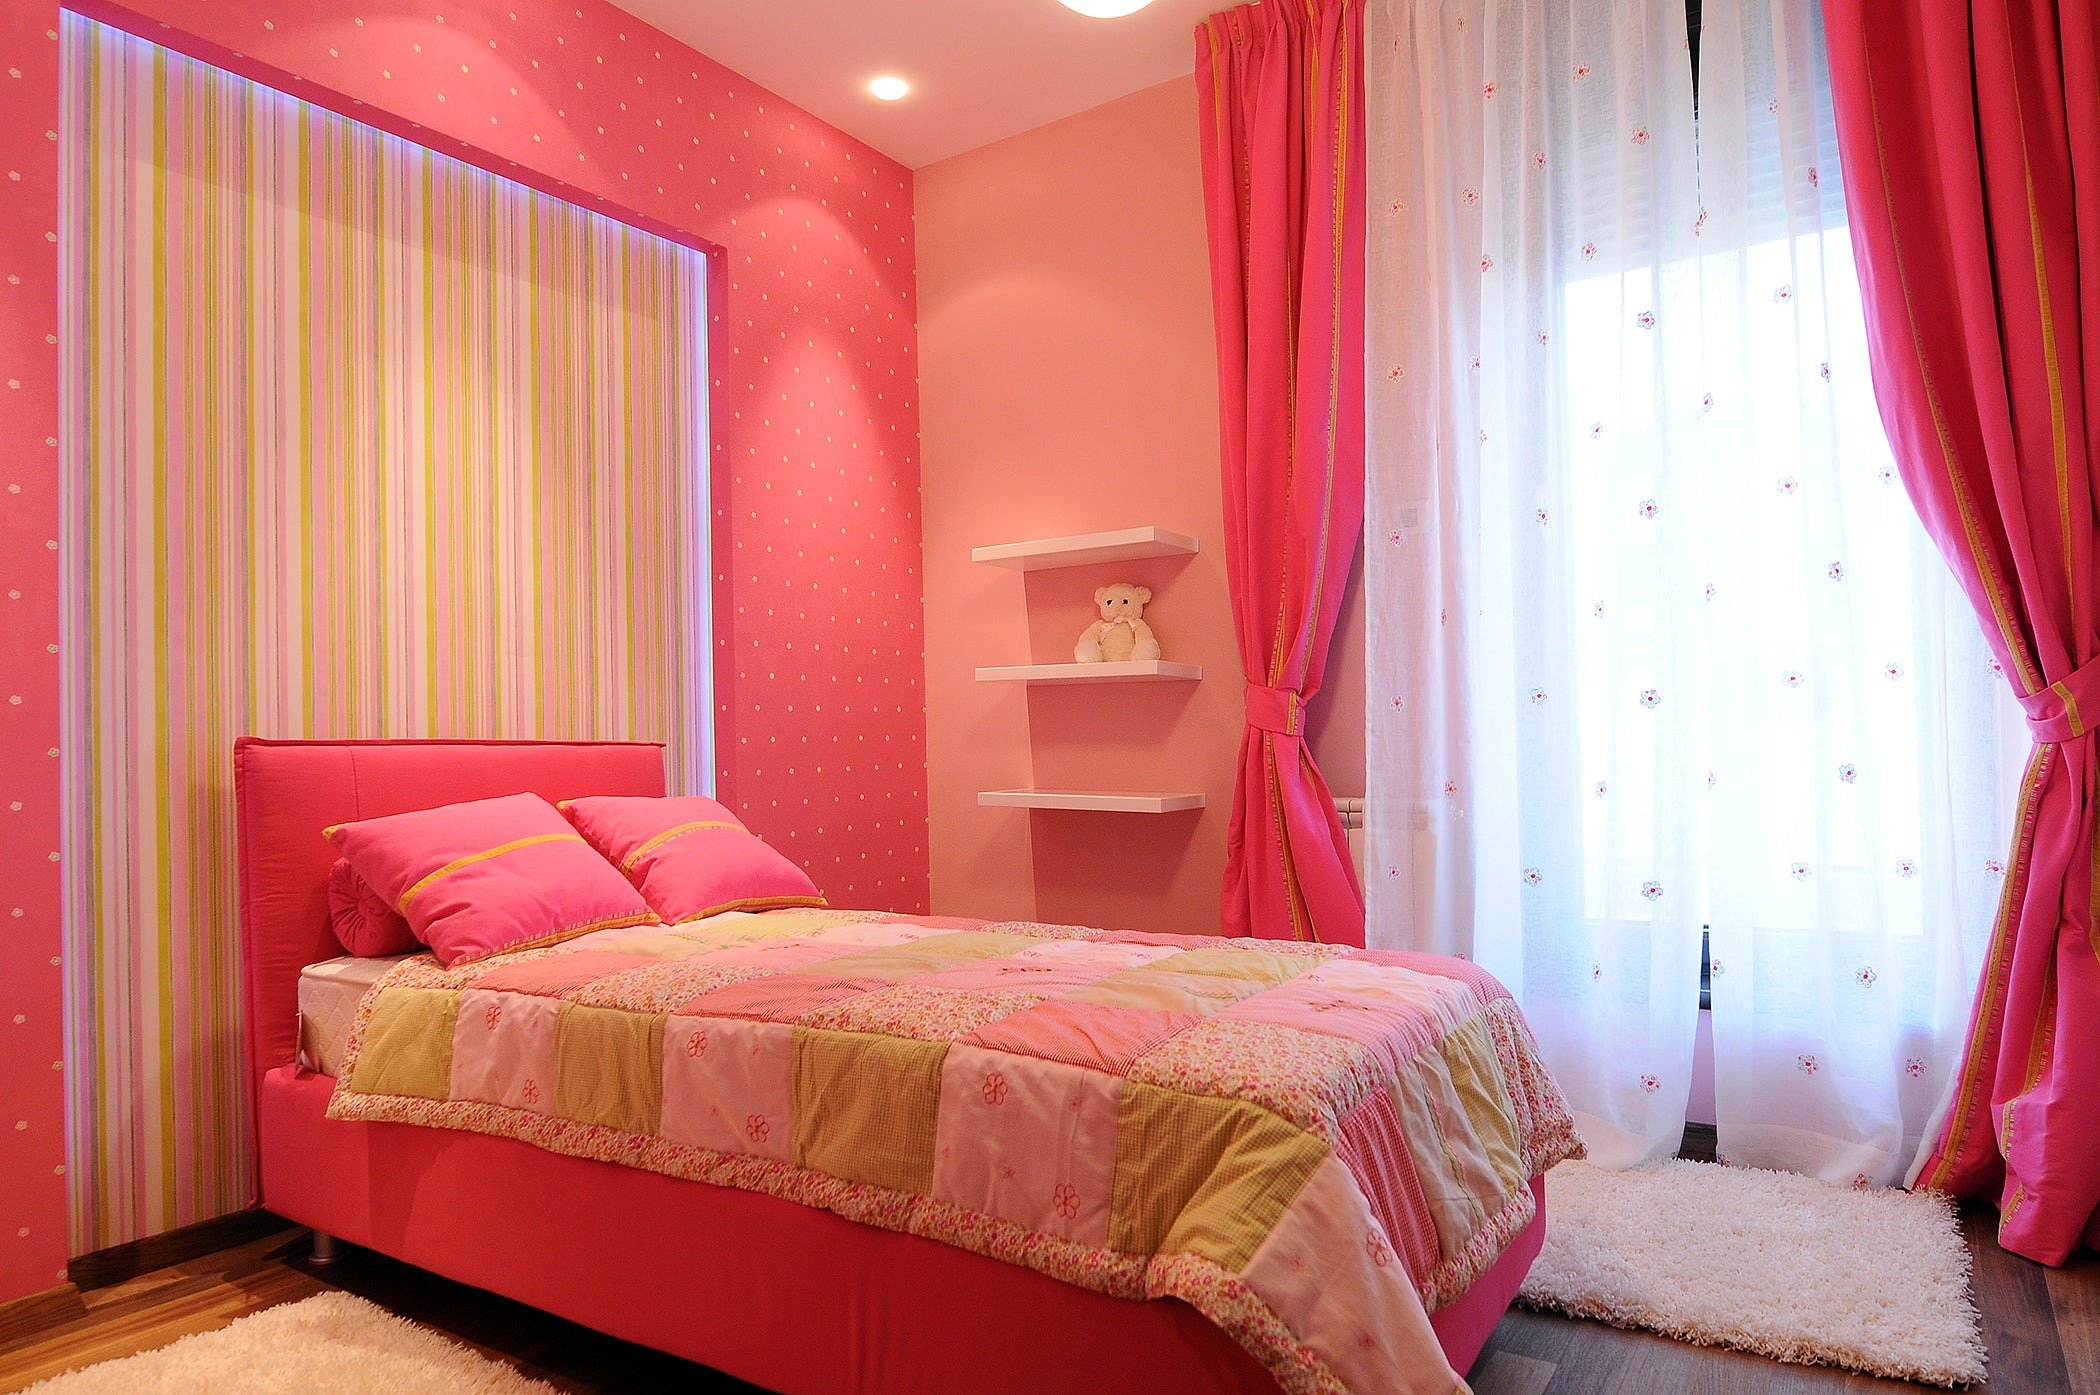 Комната в розовых тонах. Розовая спальня. Спальня в розовых тонах. Розовые стены в спальне. Шторы в спальню в розовых тонах.